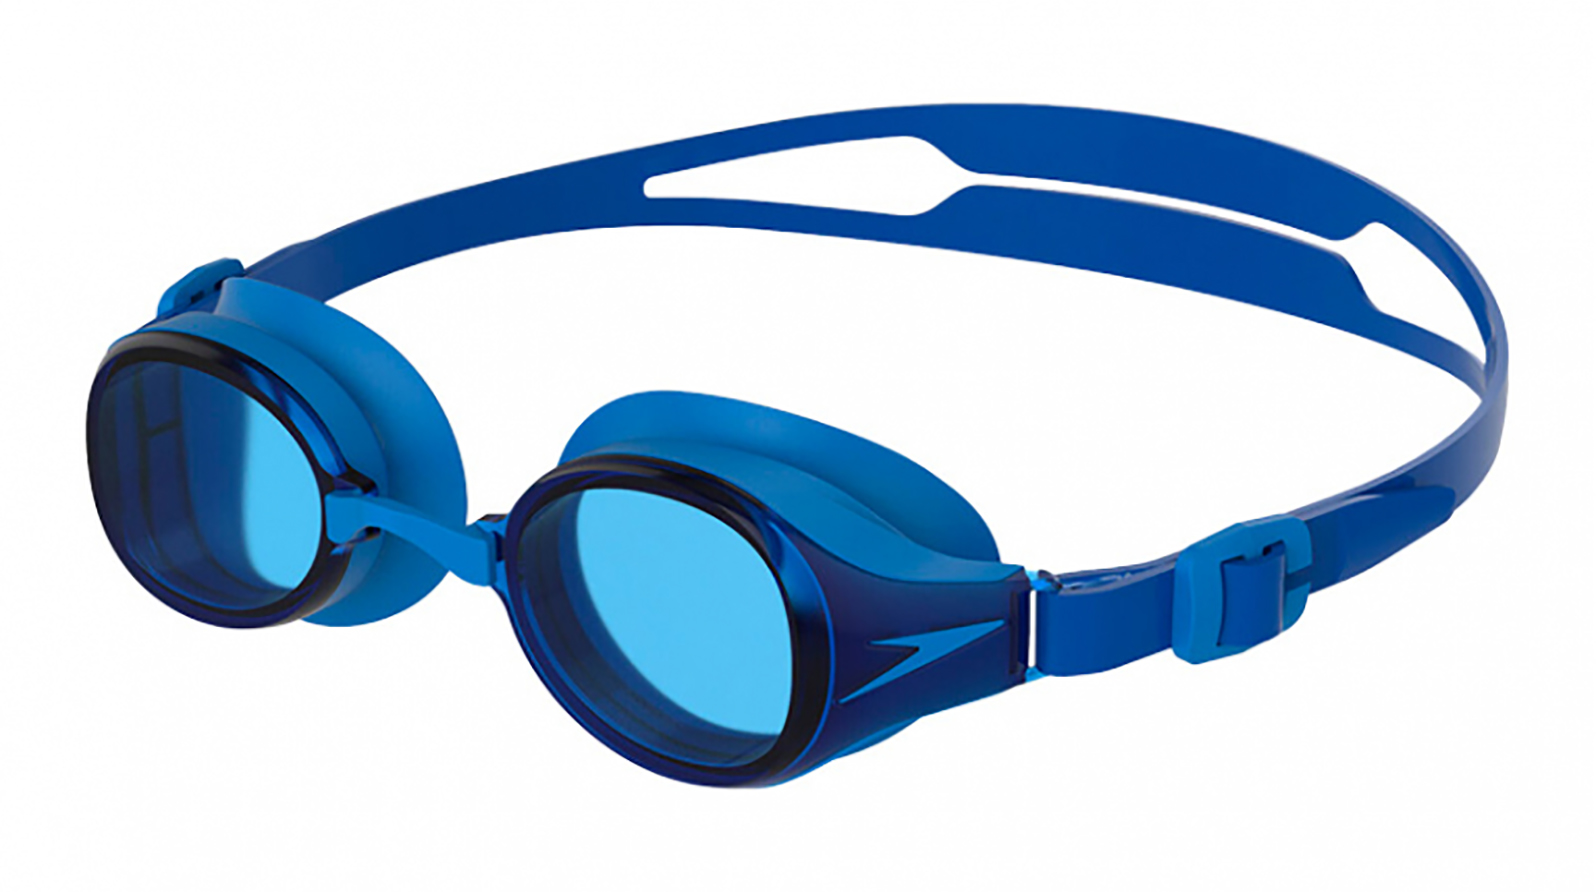 Speedo Очки для плавания Hydropure Optical F809 -4.0 мартышка и очки басни